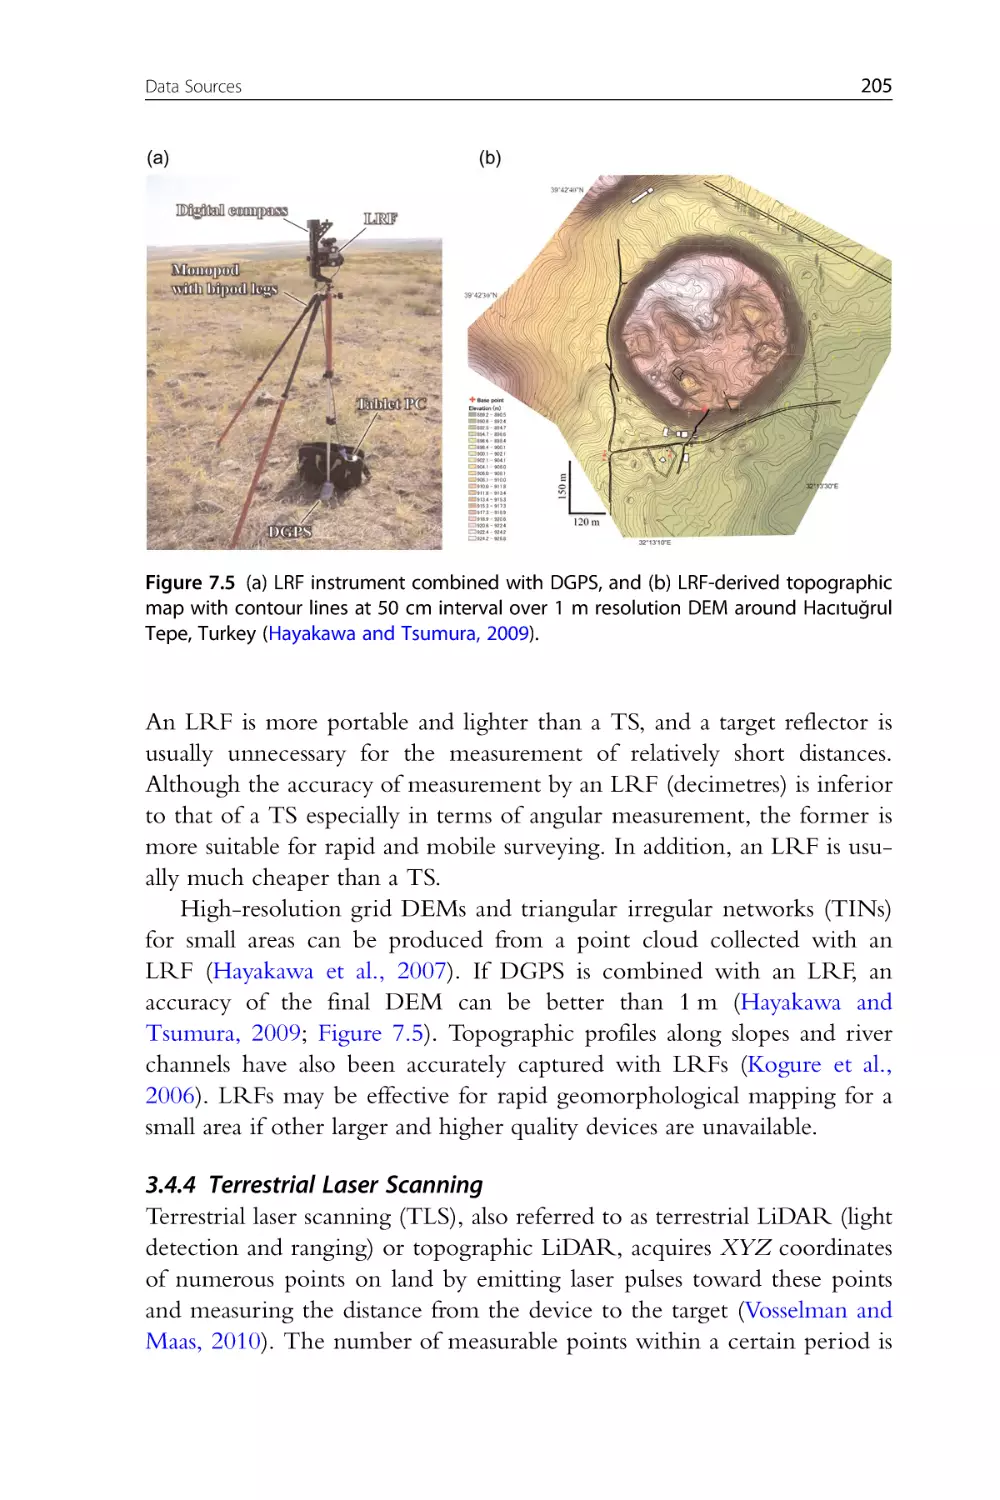 3.4.4 Terrestrial Laser Scanning